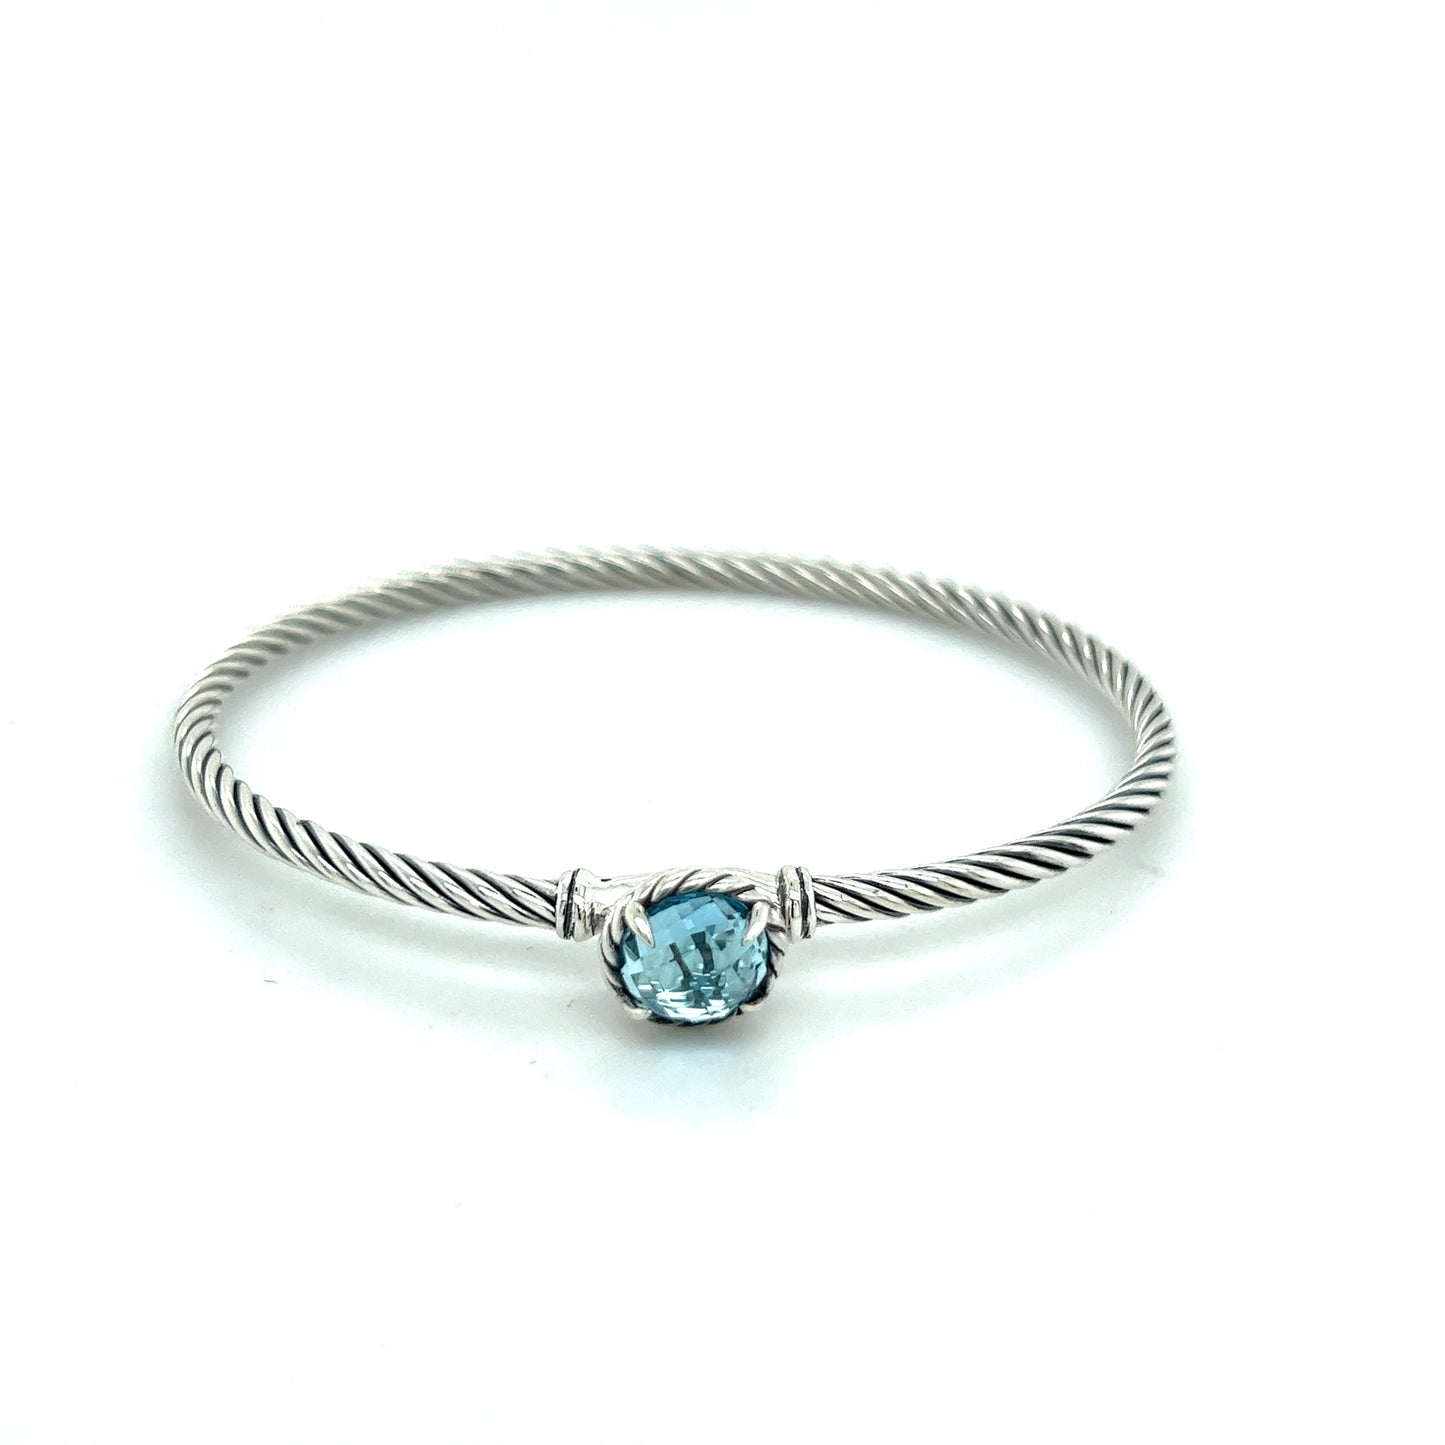 David Yurman Authentic Estate Blue Topaz Petite Chantelaine Bracelet Size 7.5" Medium Silver DY197 - Certified Fine Jewelry